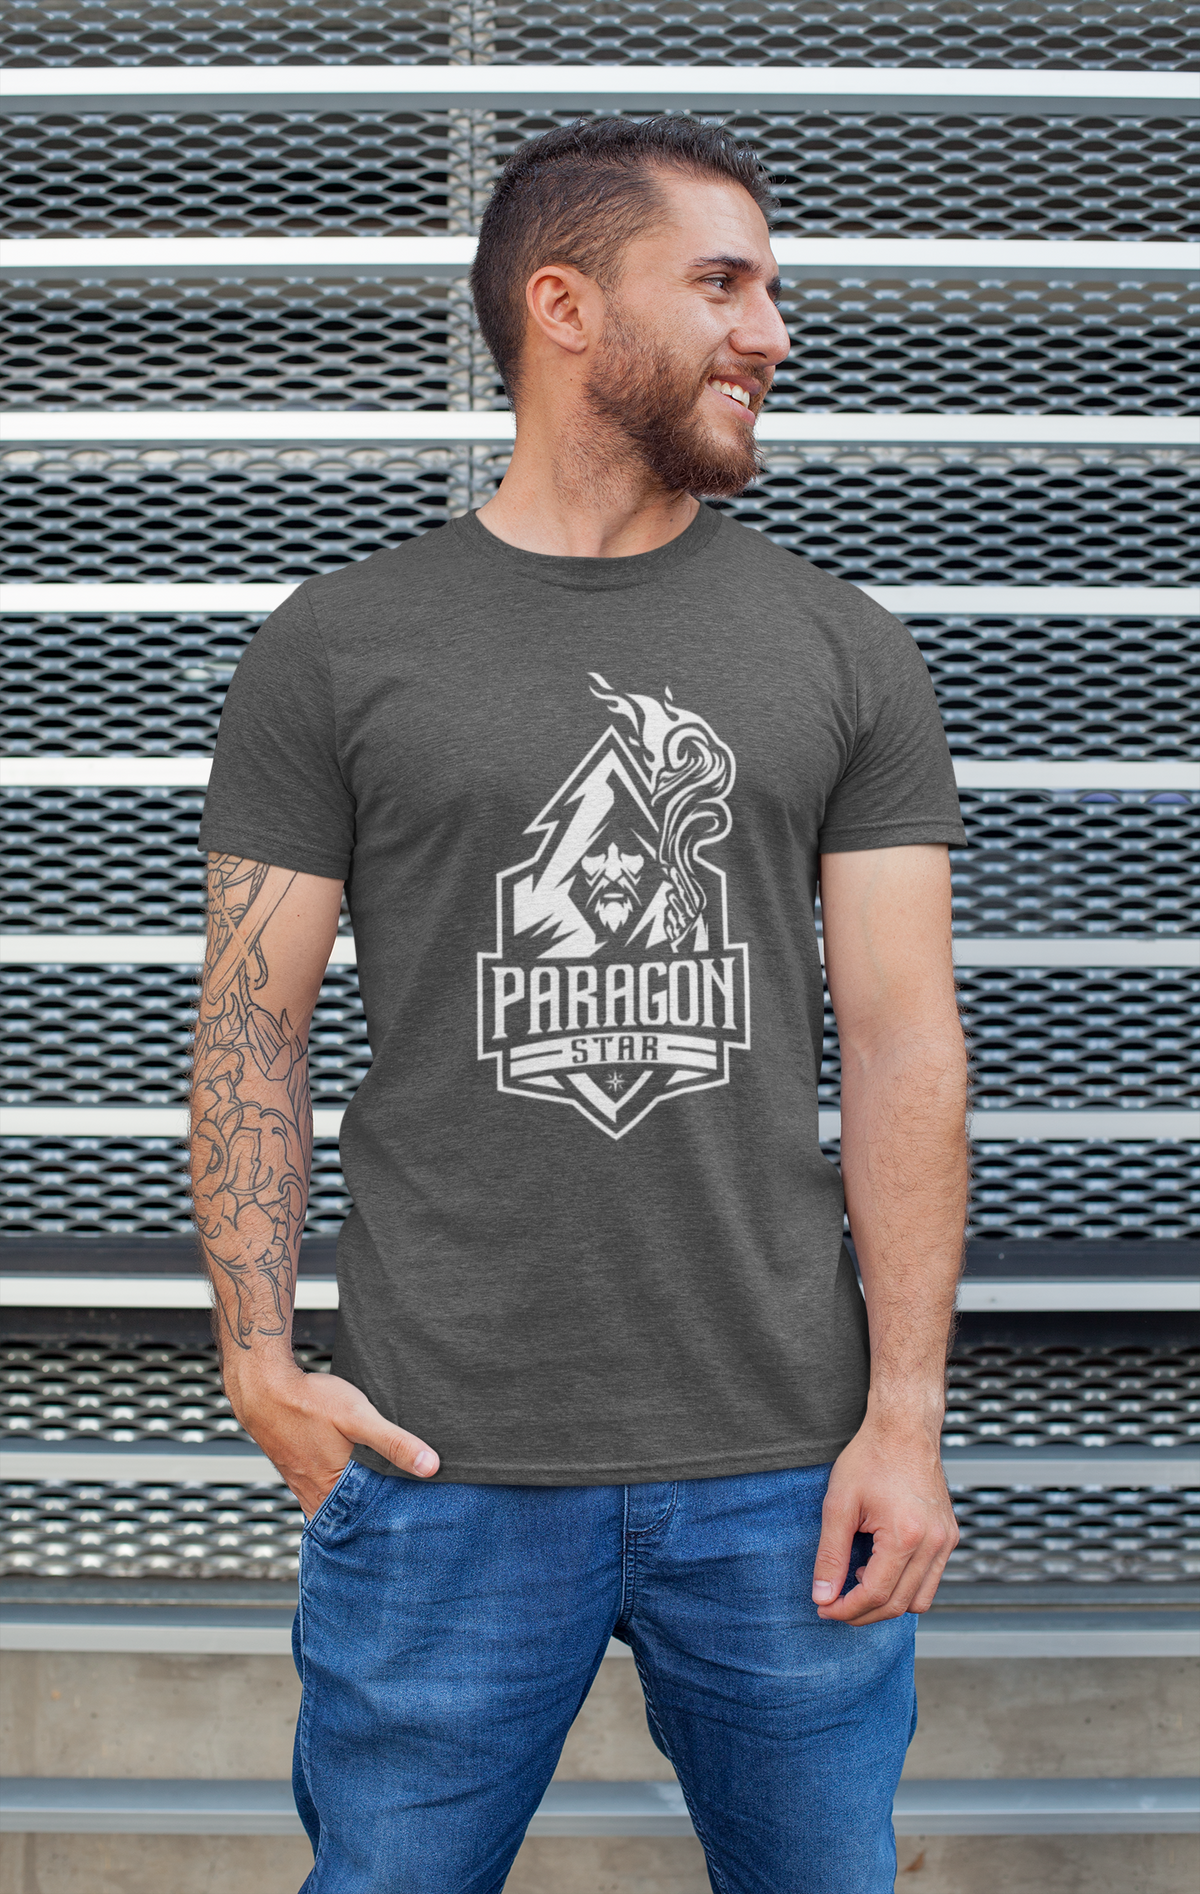 Paragon Star Wizard Themed T Shirt